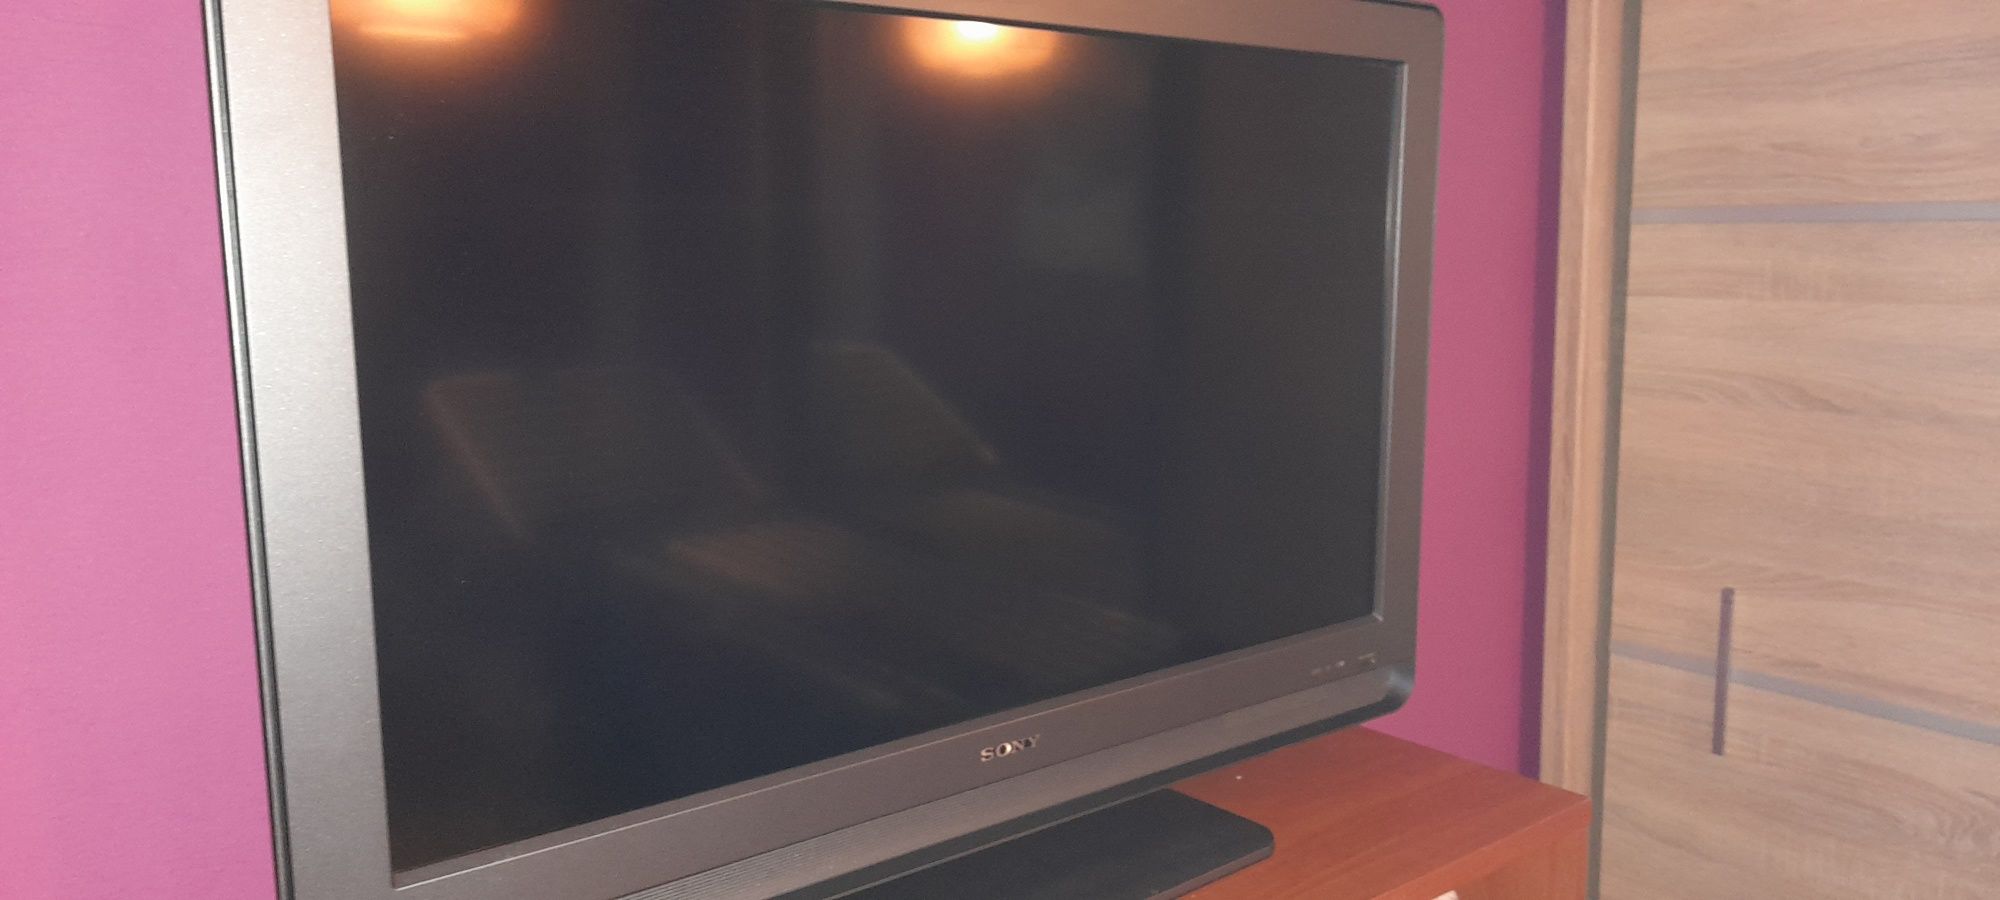 Tv Sony Lcd Digital 

MODEL NO. KDL-37U4000

LCD DIGITAL COLOUR TV


M